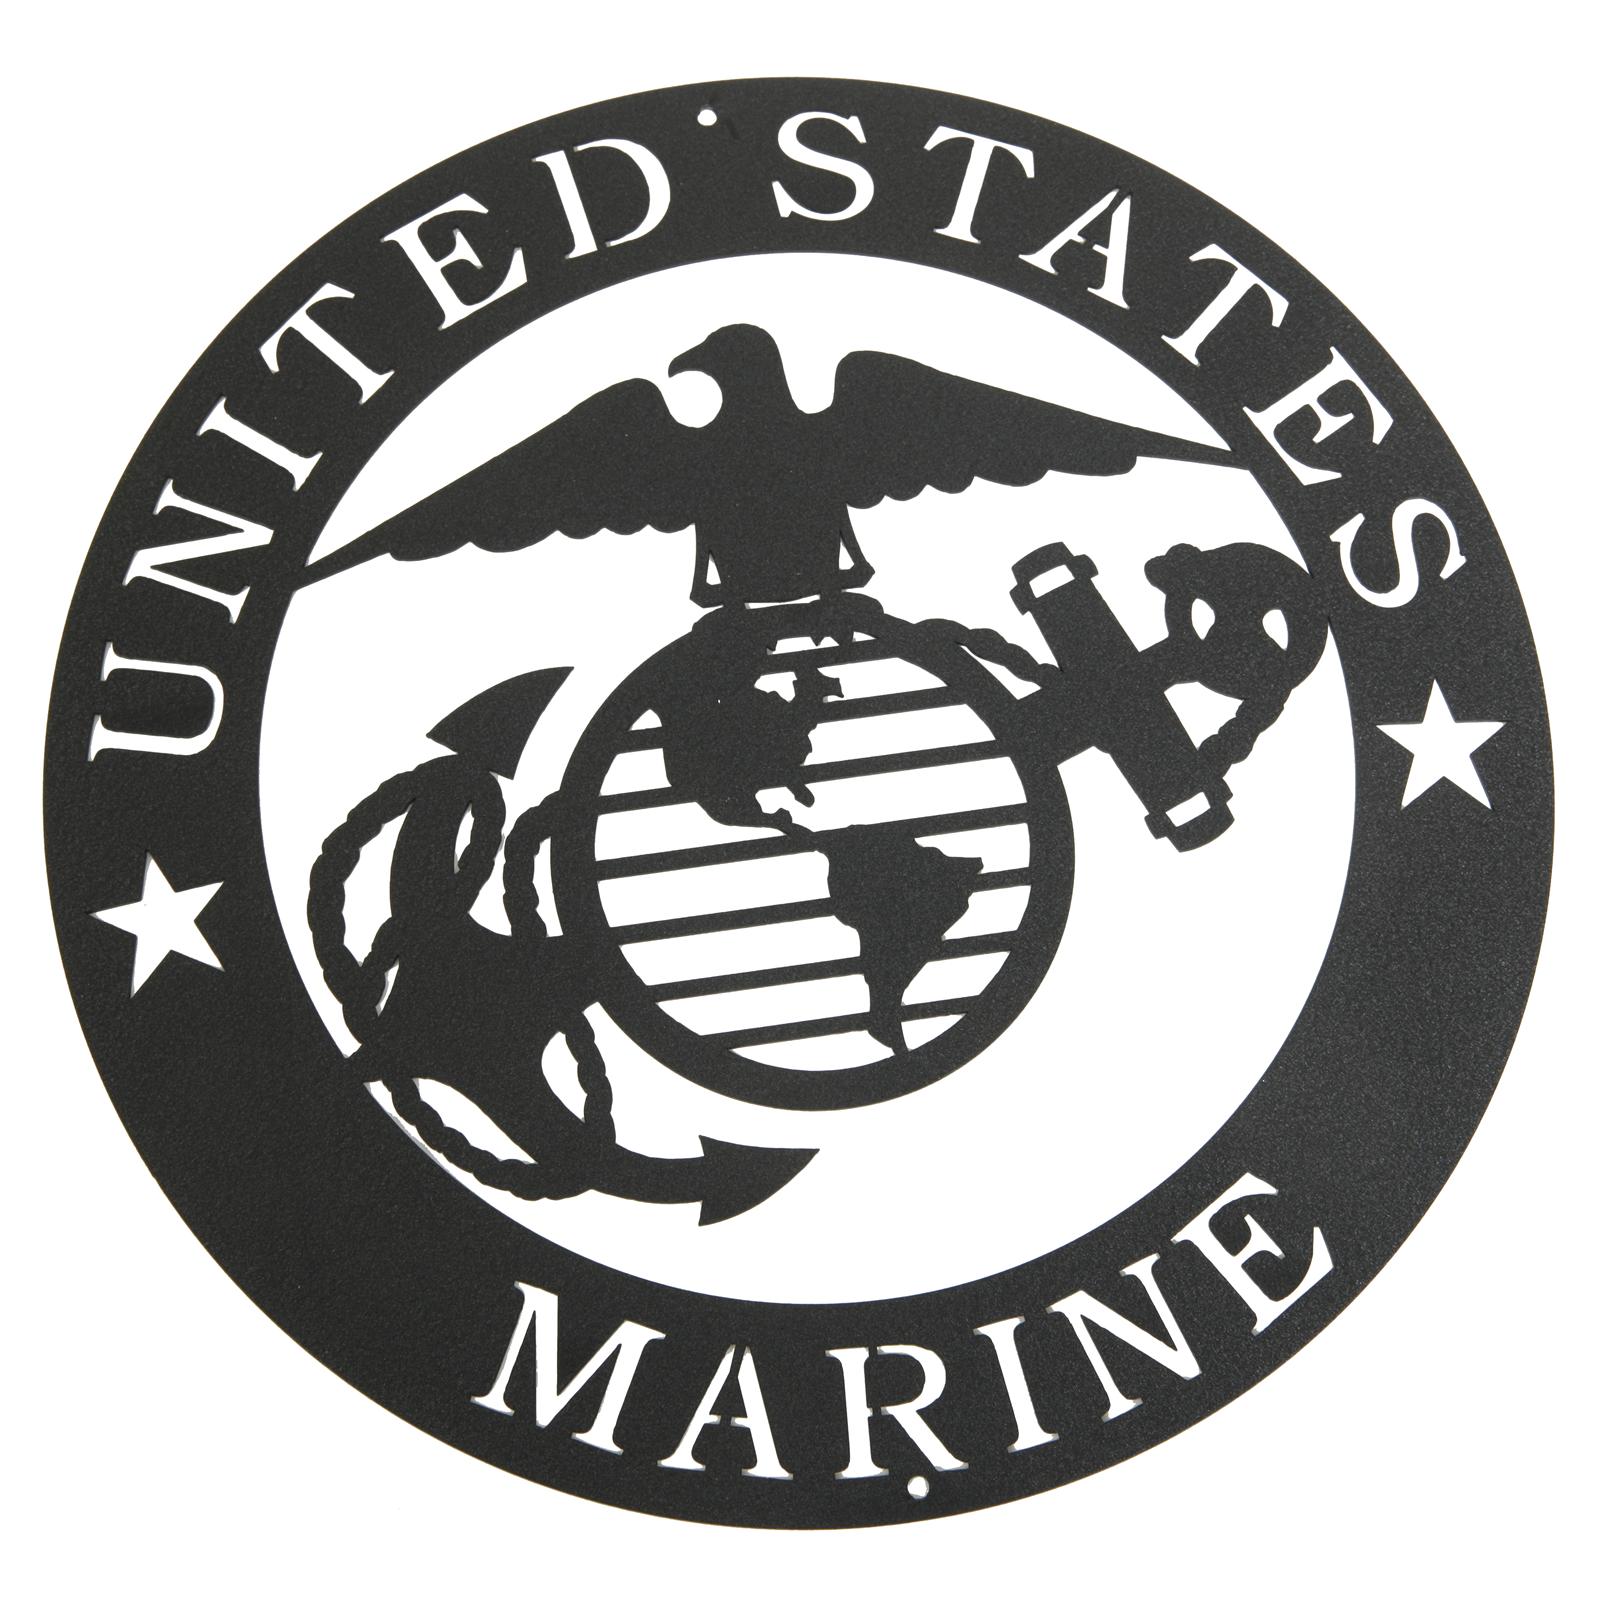 marine corps logo